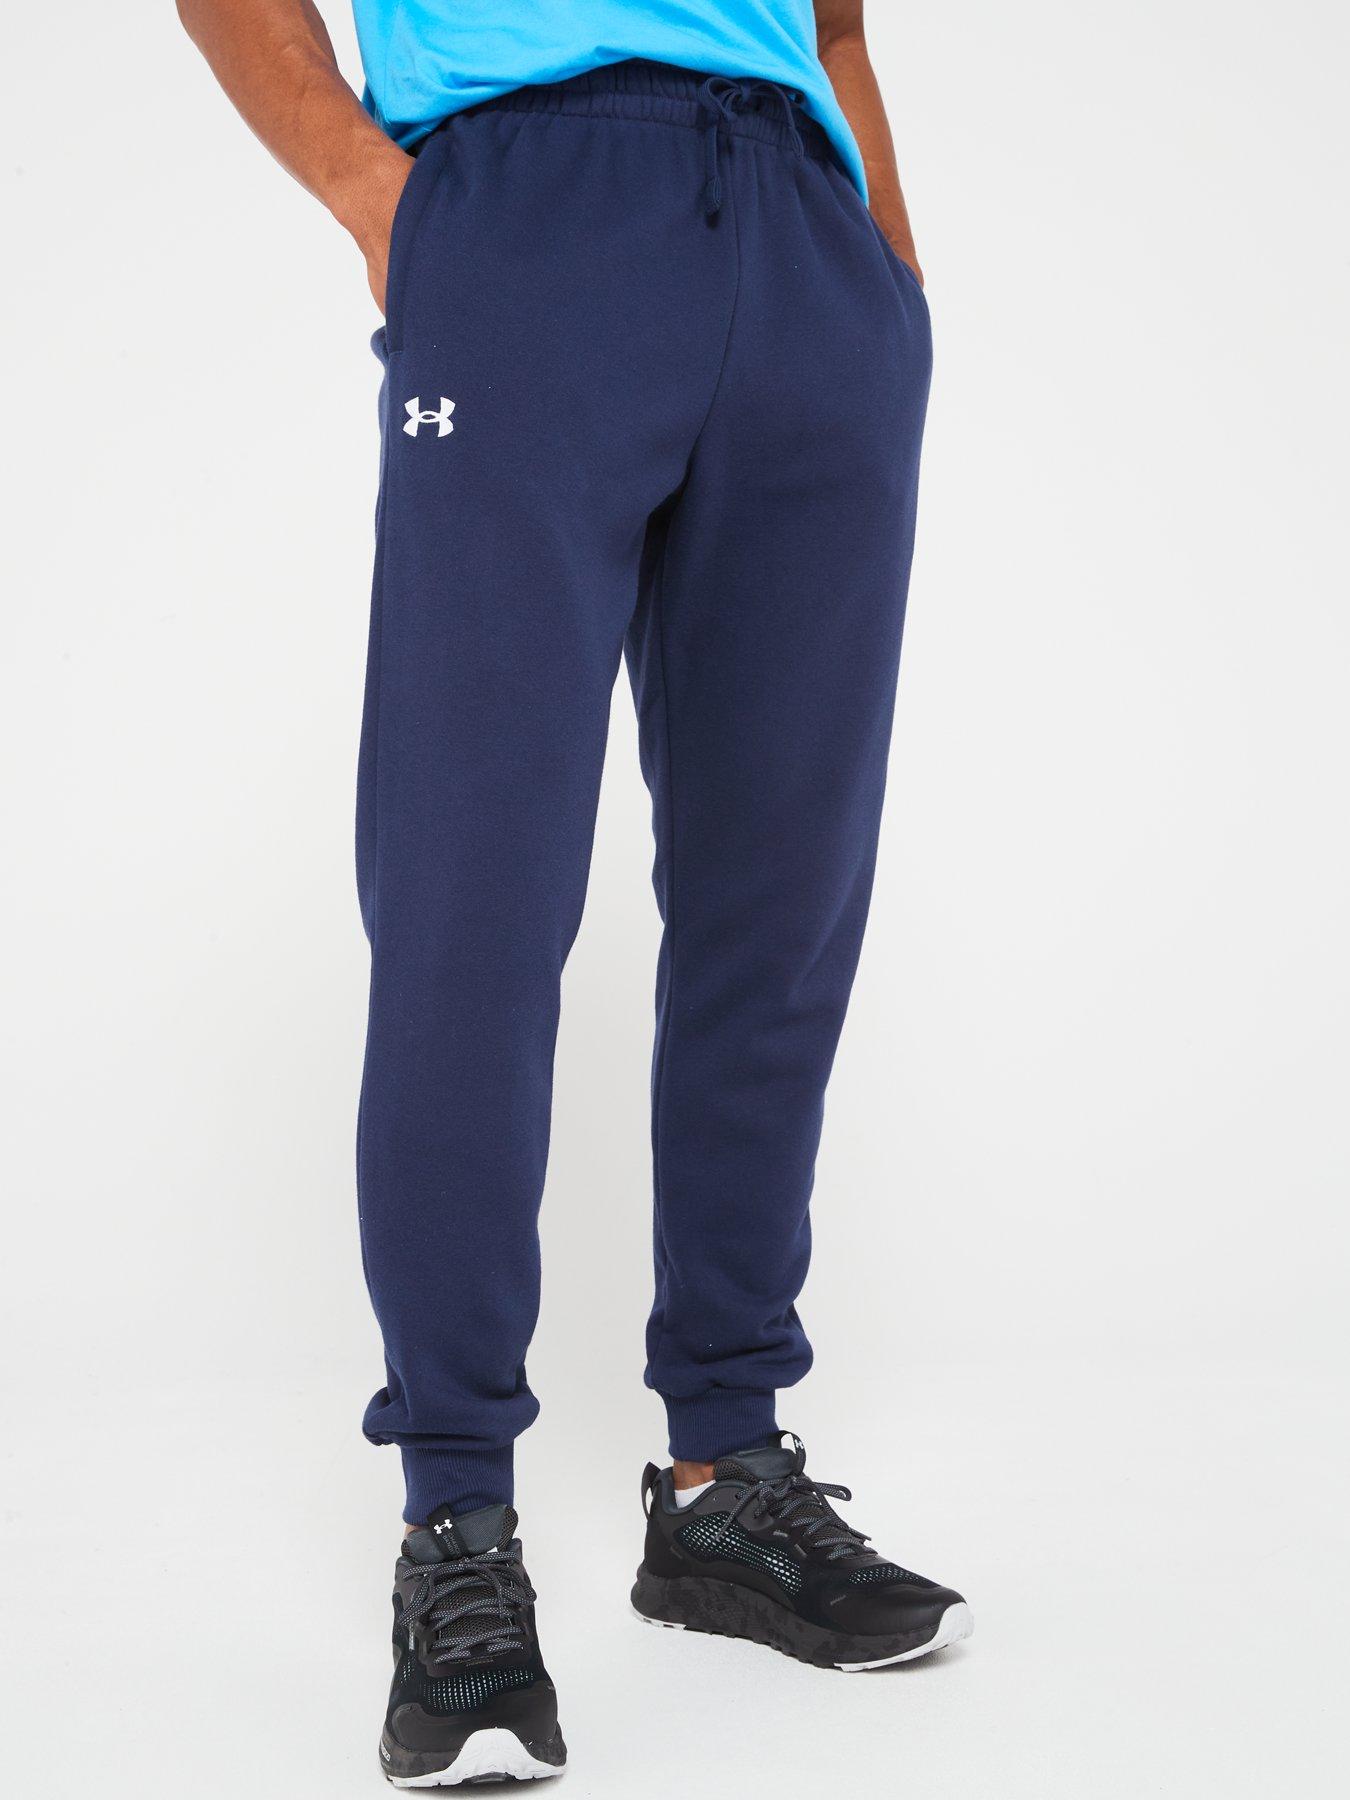 Navy Blue Nike Track Pants 840